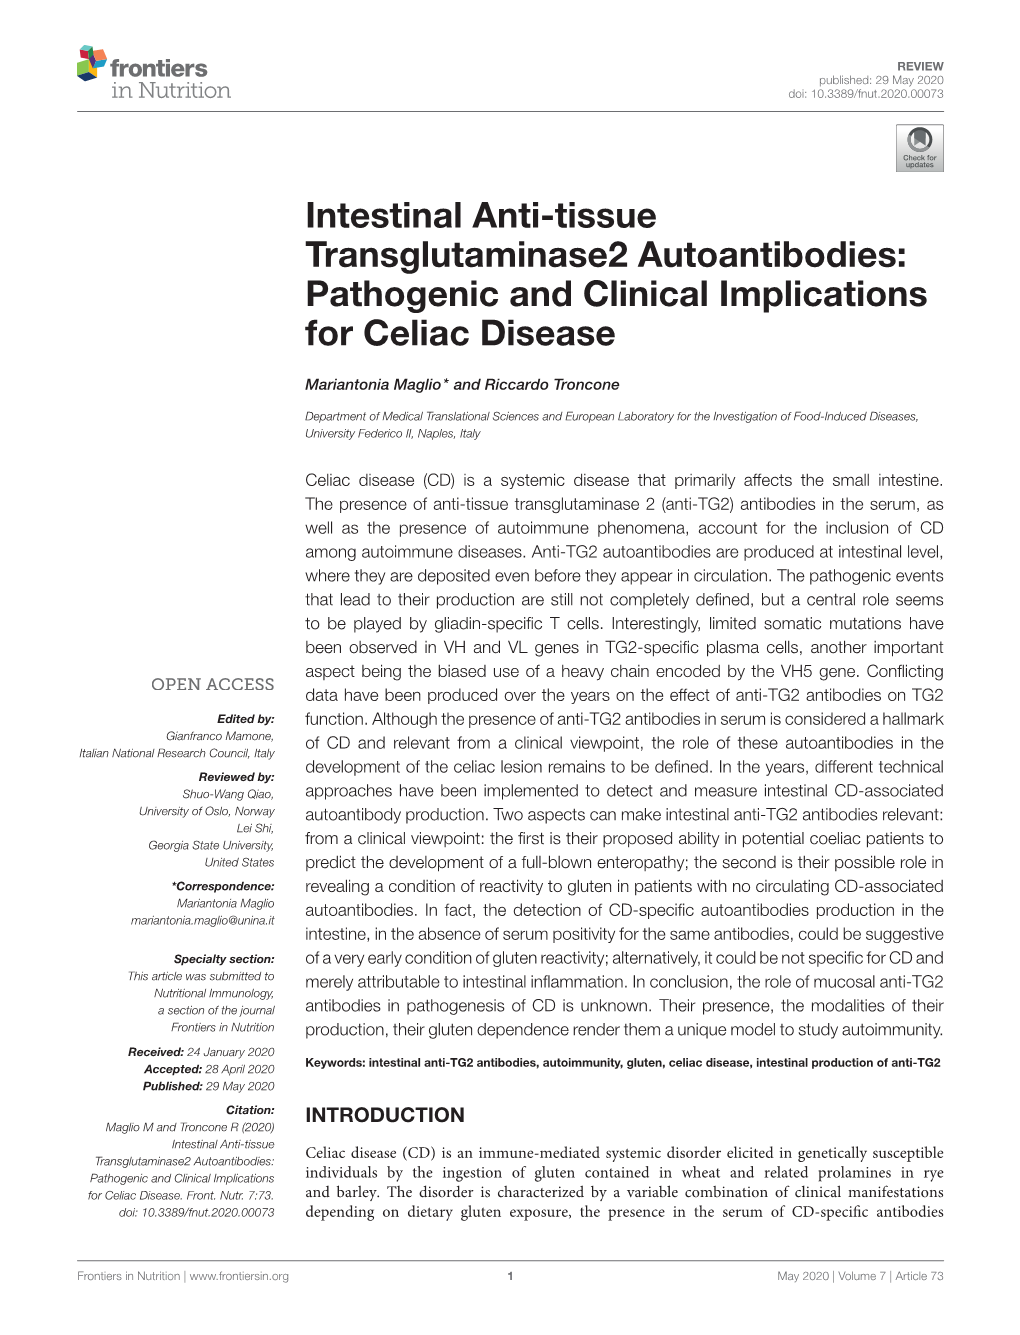 Intestinal Anti-Tissue Transglutaminase2 Autoantibodies: Pathogenic and Clinical Implications for Celiac Disease